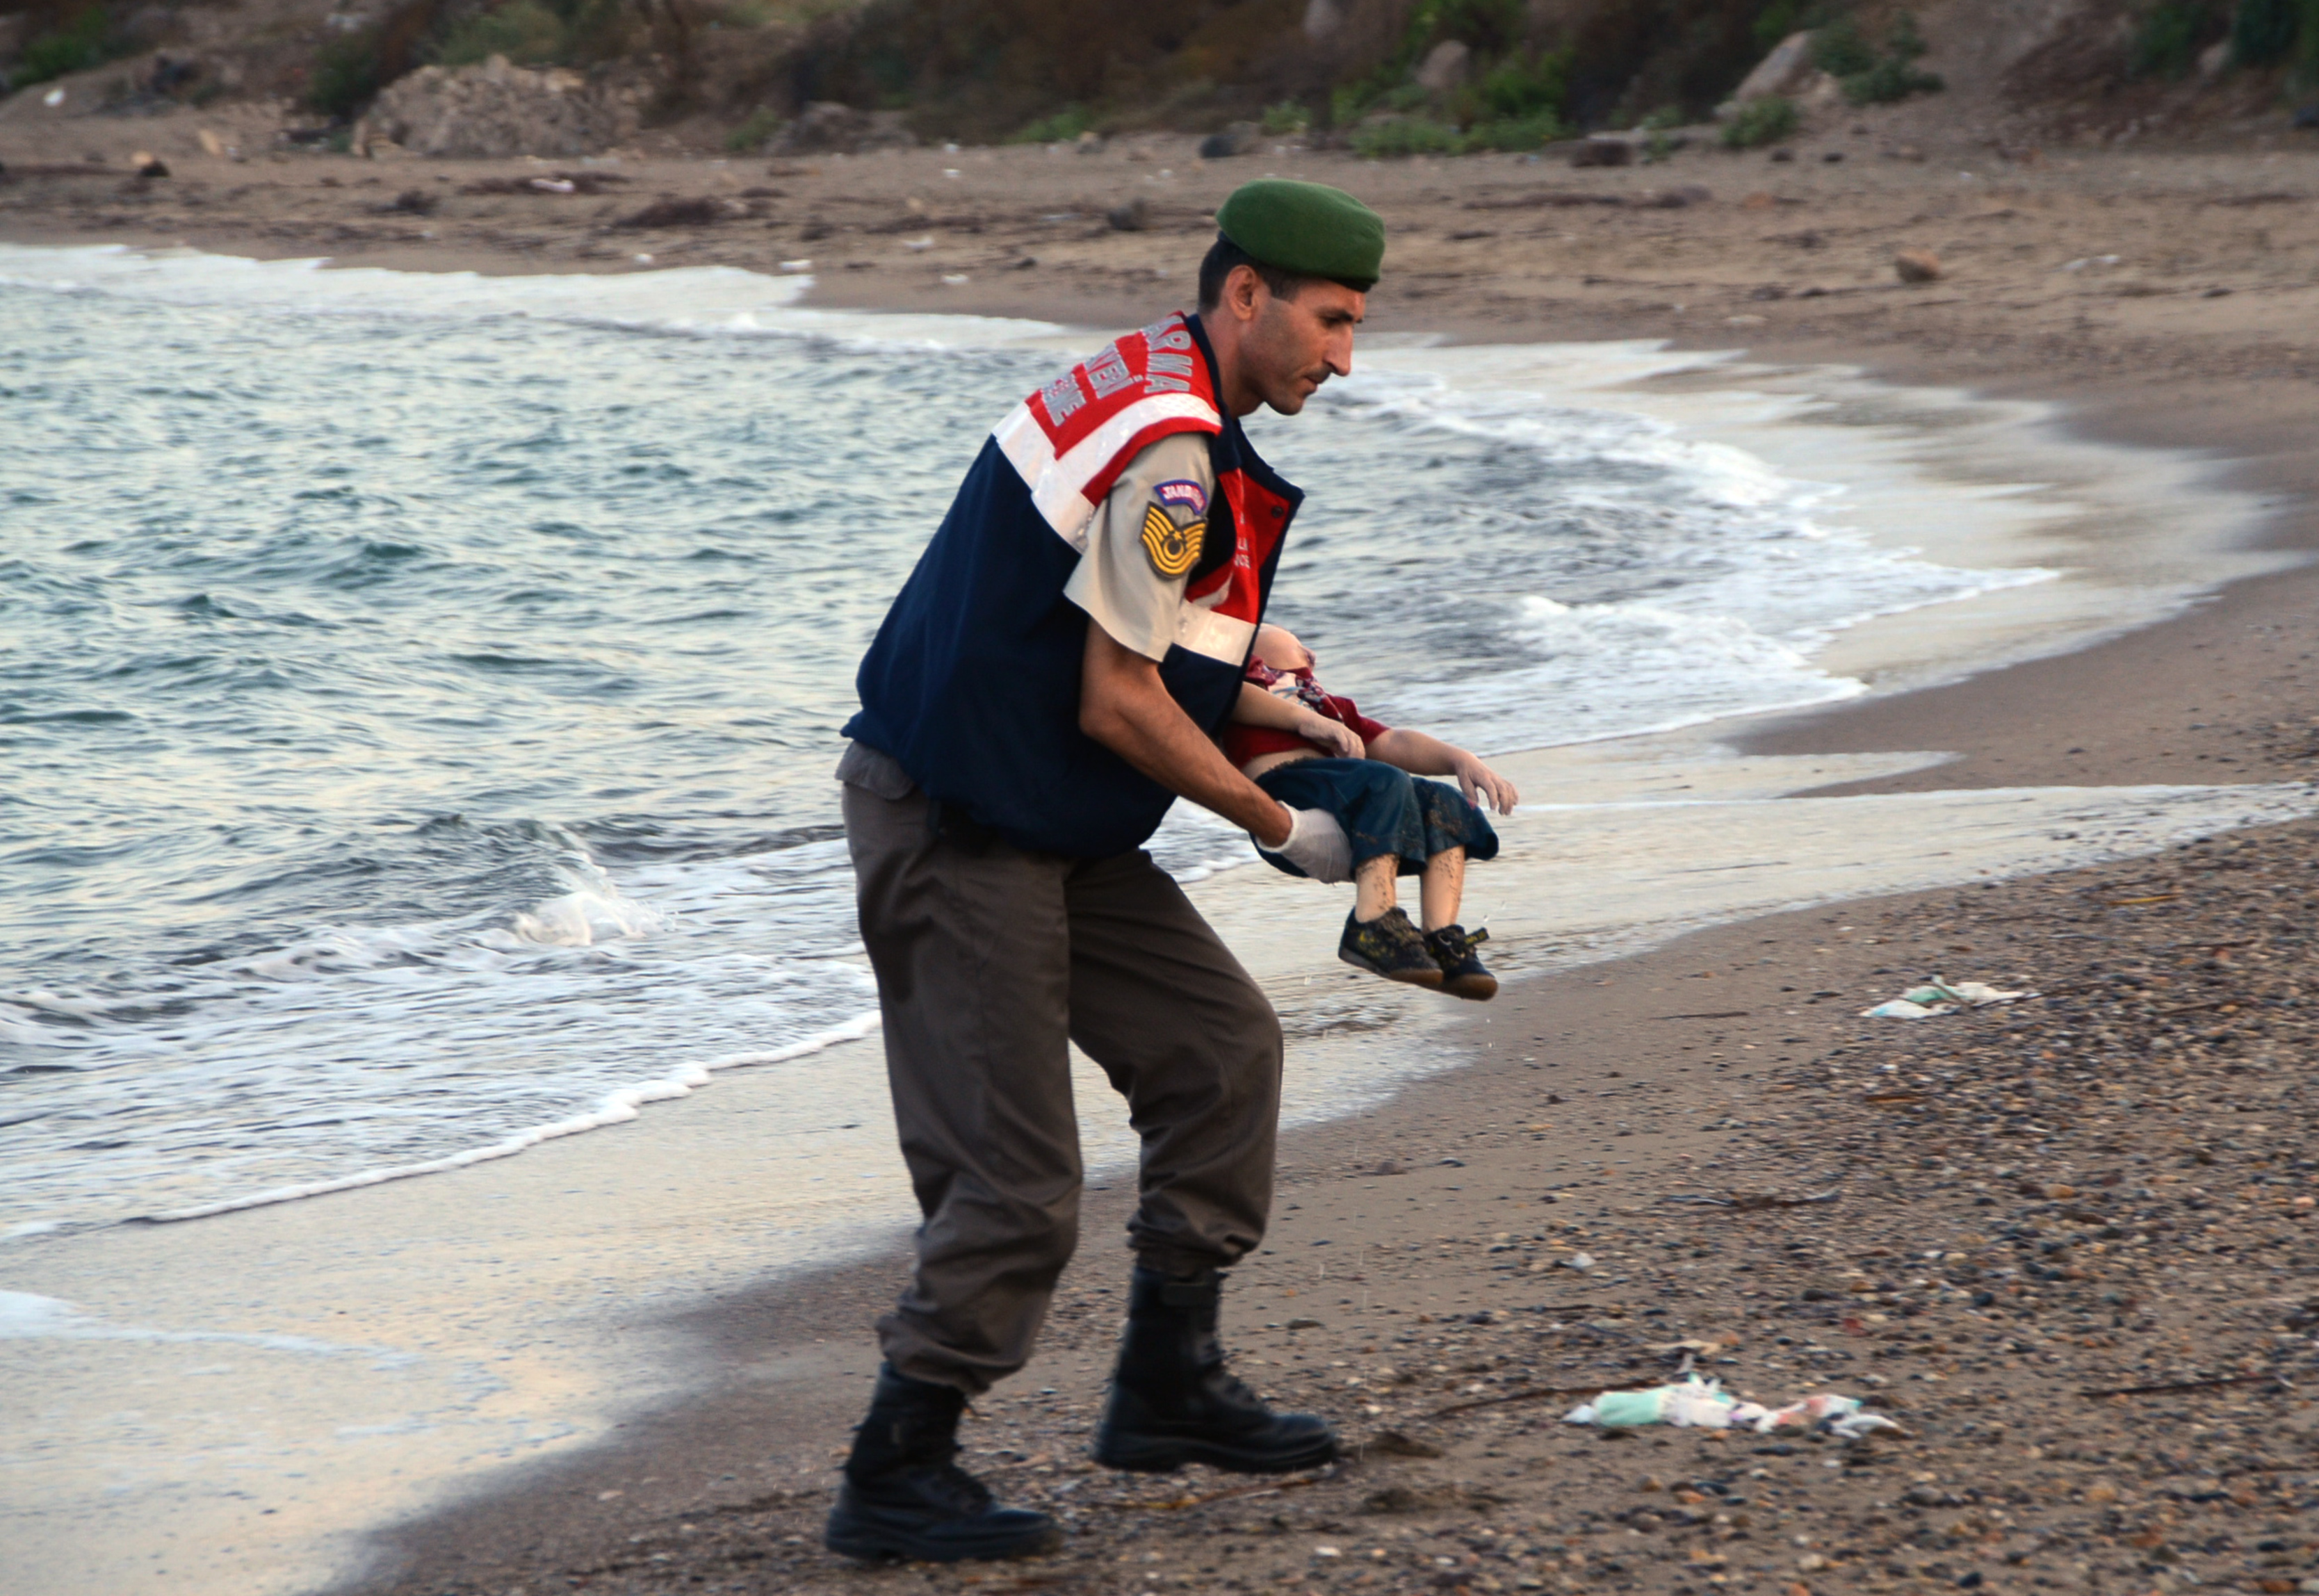 Syrian migrant tragedy - Drowned Syrian boy Aylan Kurdi - Pictures